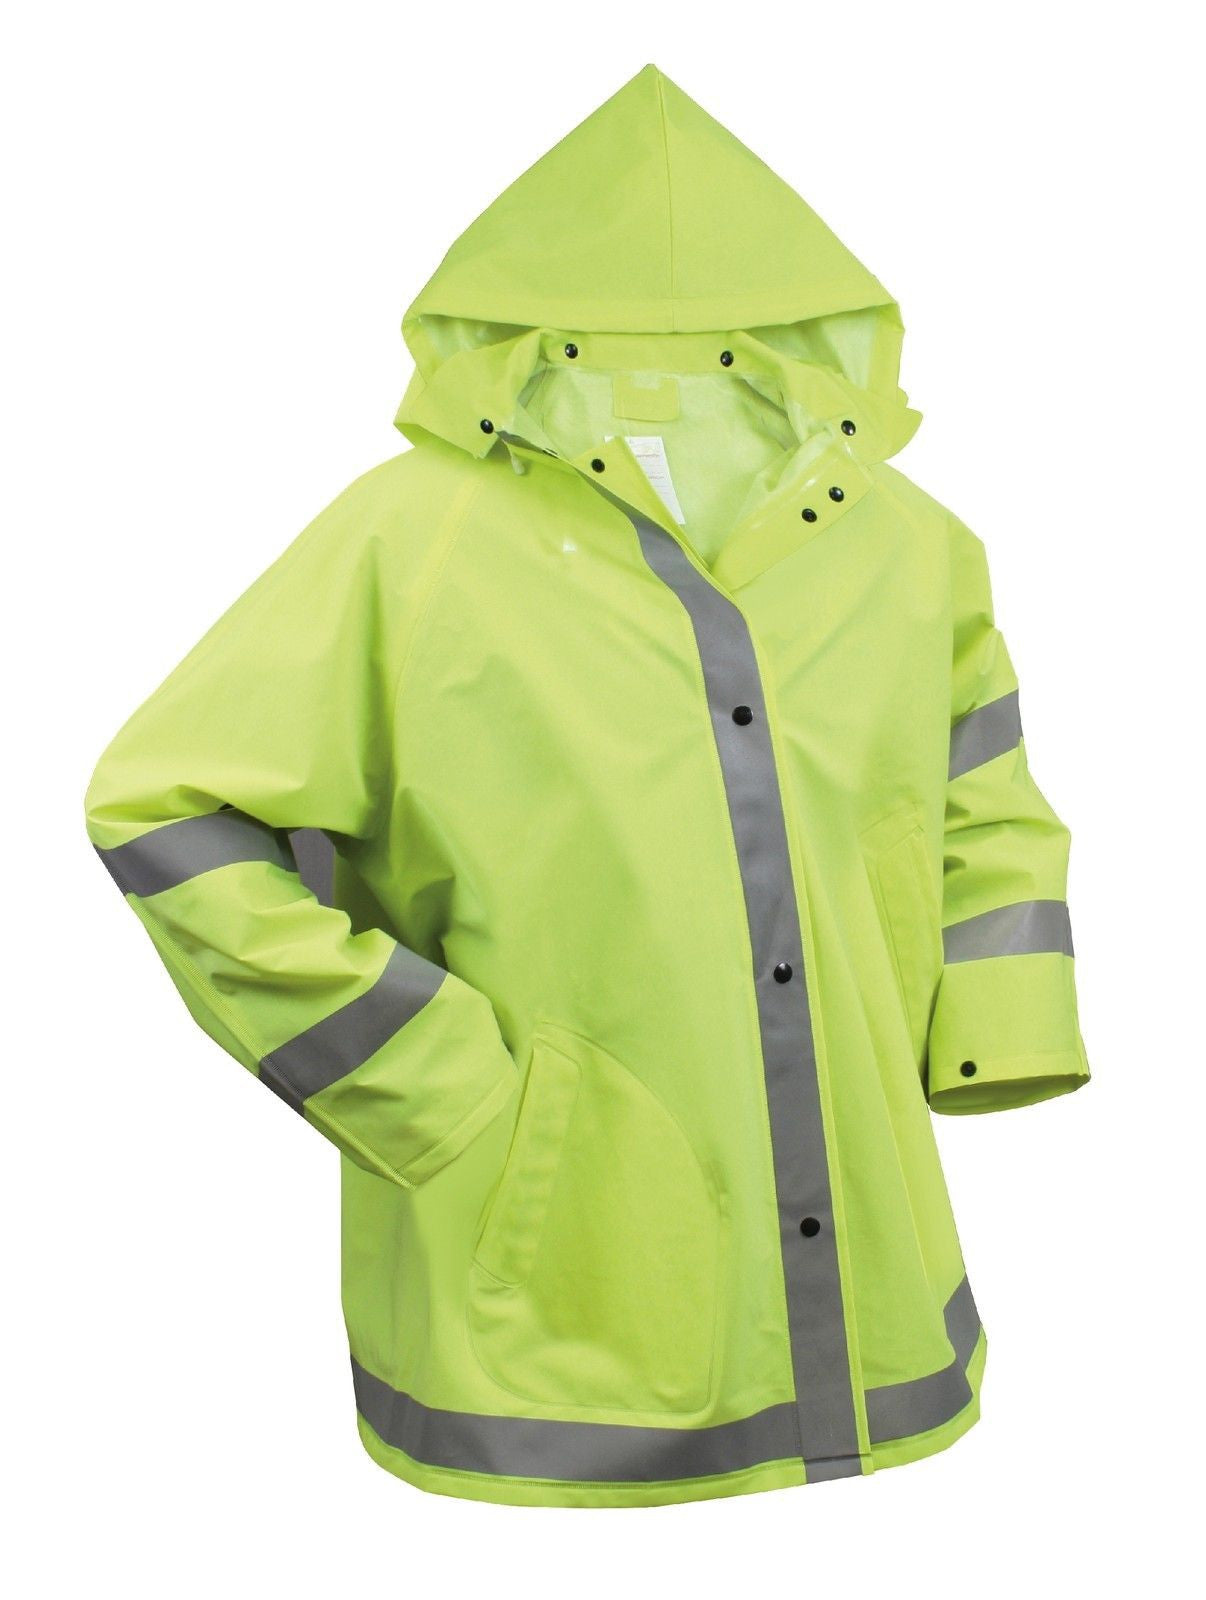 Safety Rain Jacket - Reflective Green Hi-Vis Raincoat Rainjacket w/ Hood